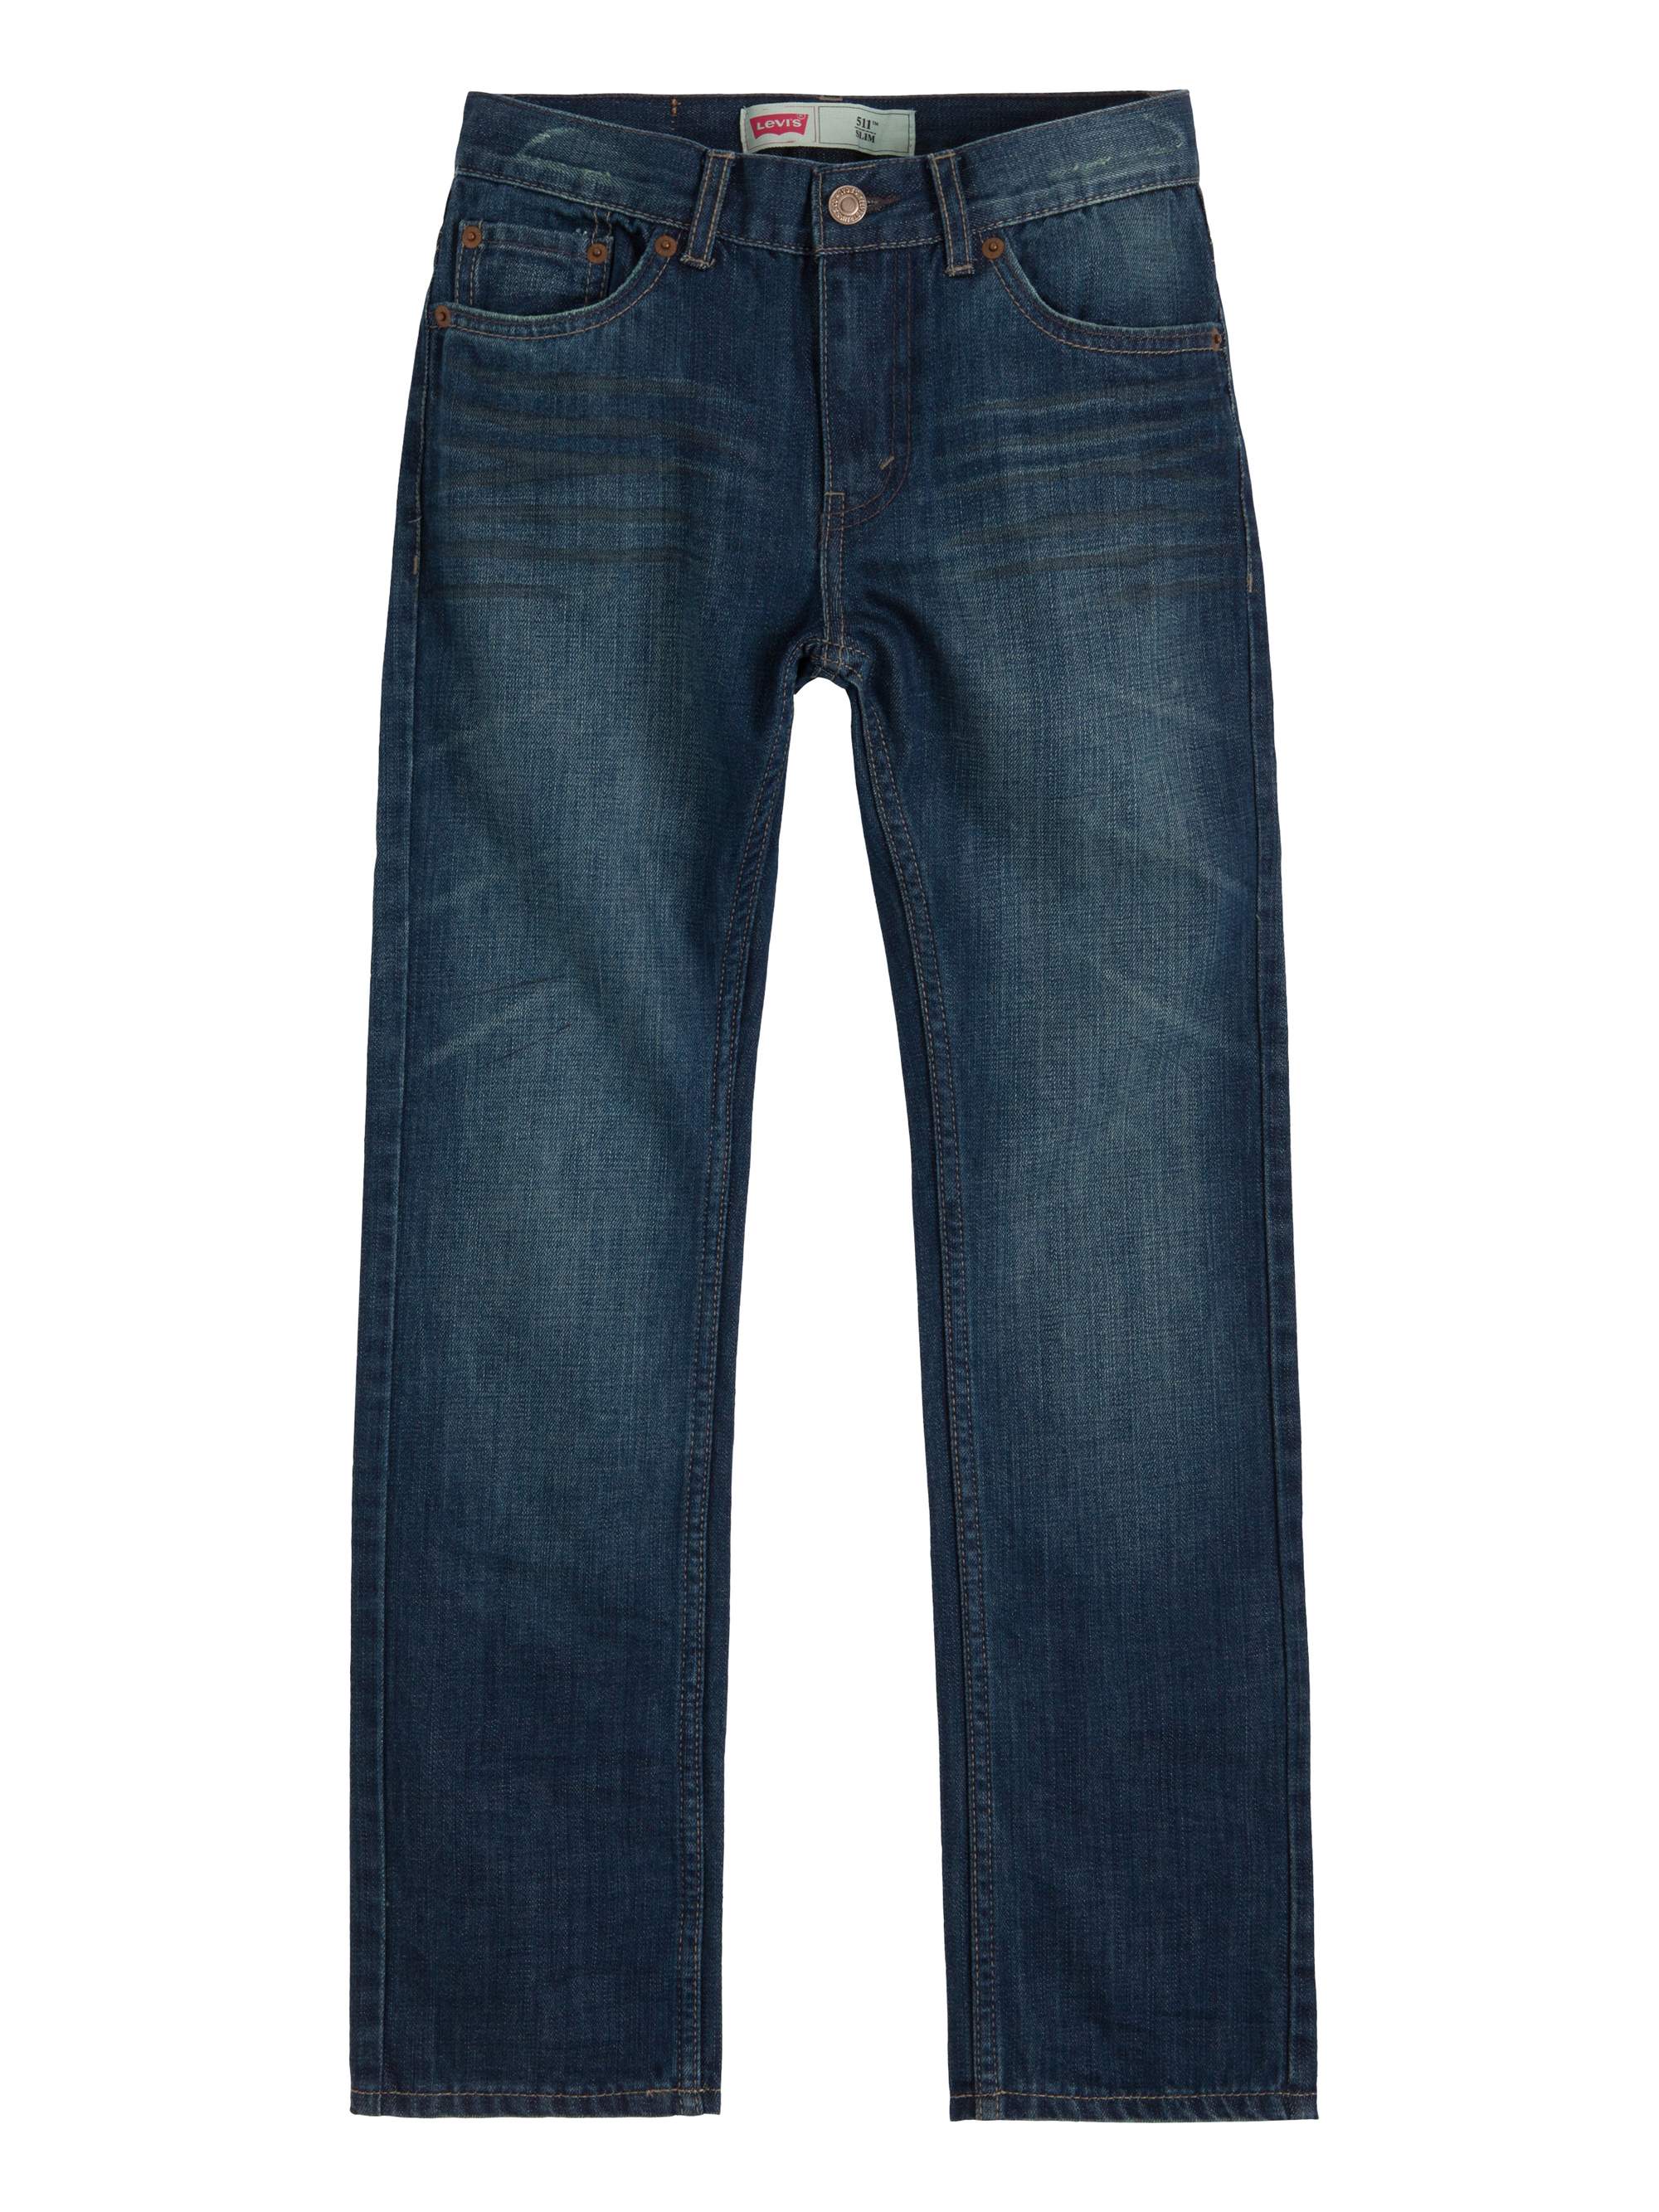 Levi's Boys' 511 Slim Fit Jeans, Sizes 4-20 - image 1 of 3